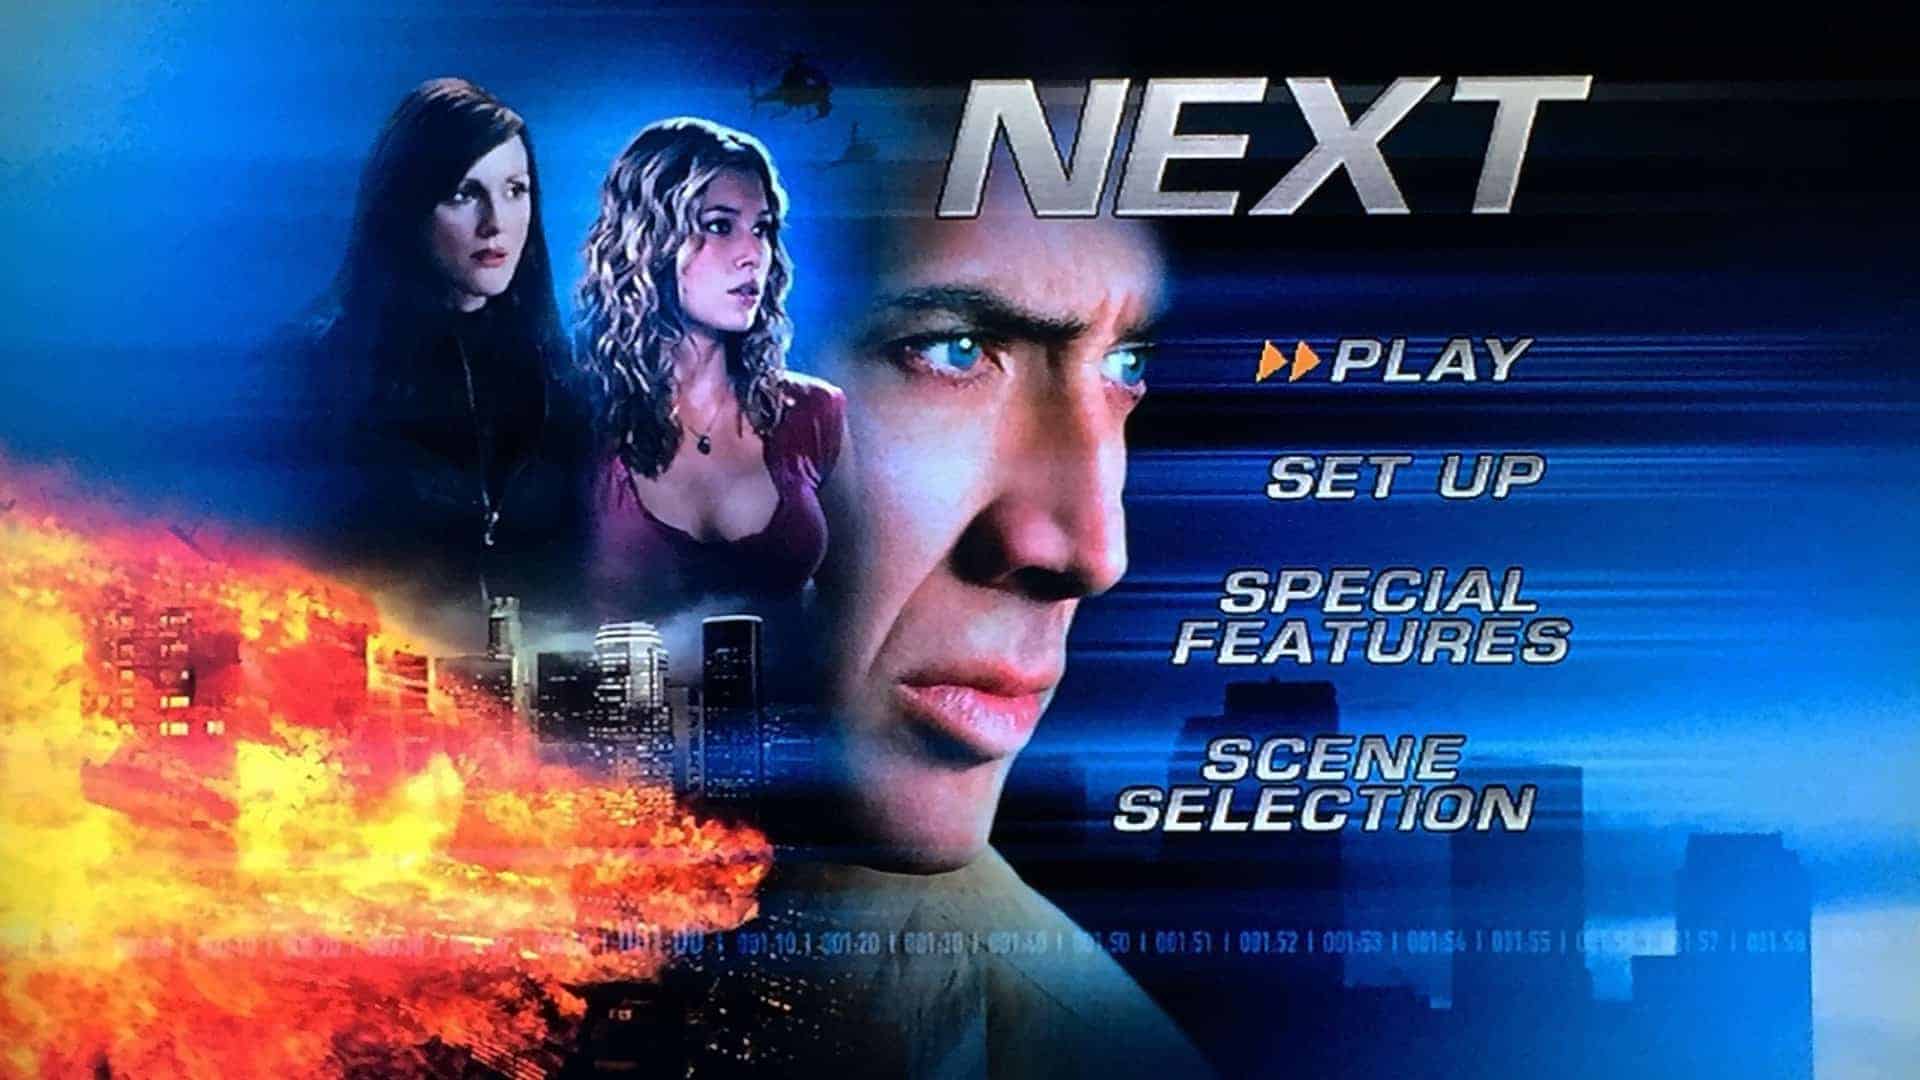 Next (2007) HD BLuray Hindi Dubbed Download